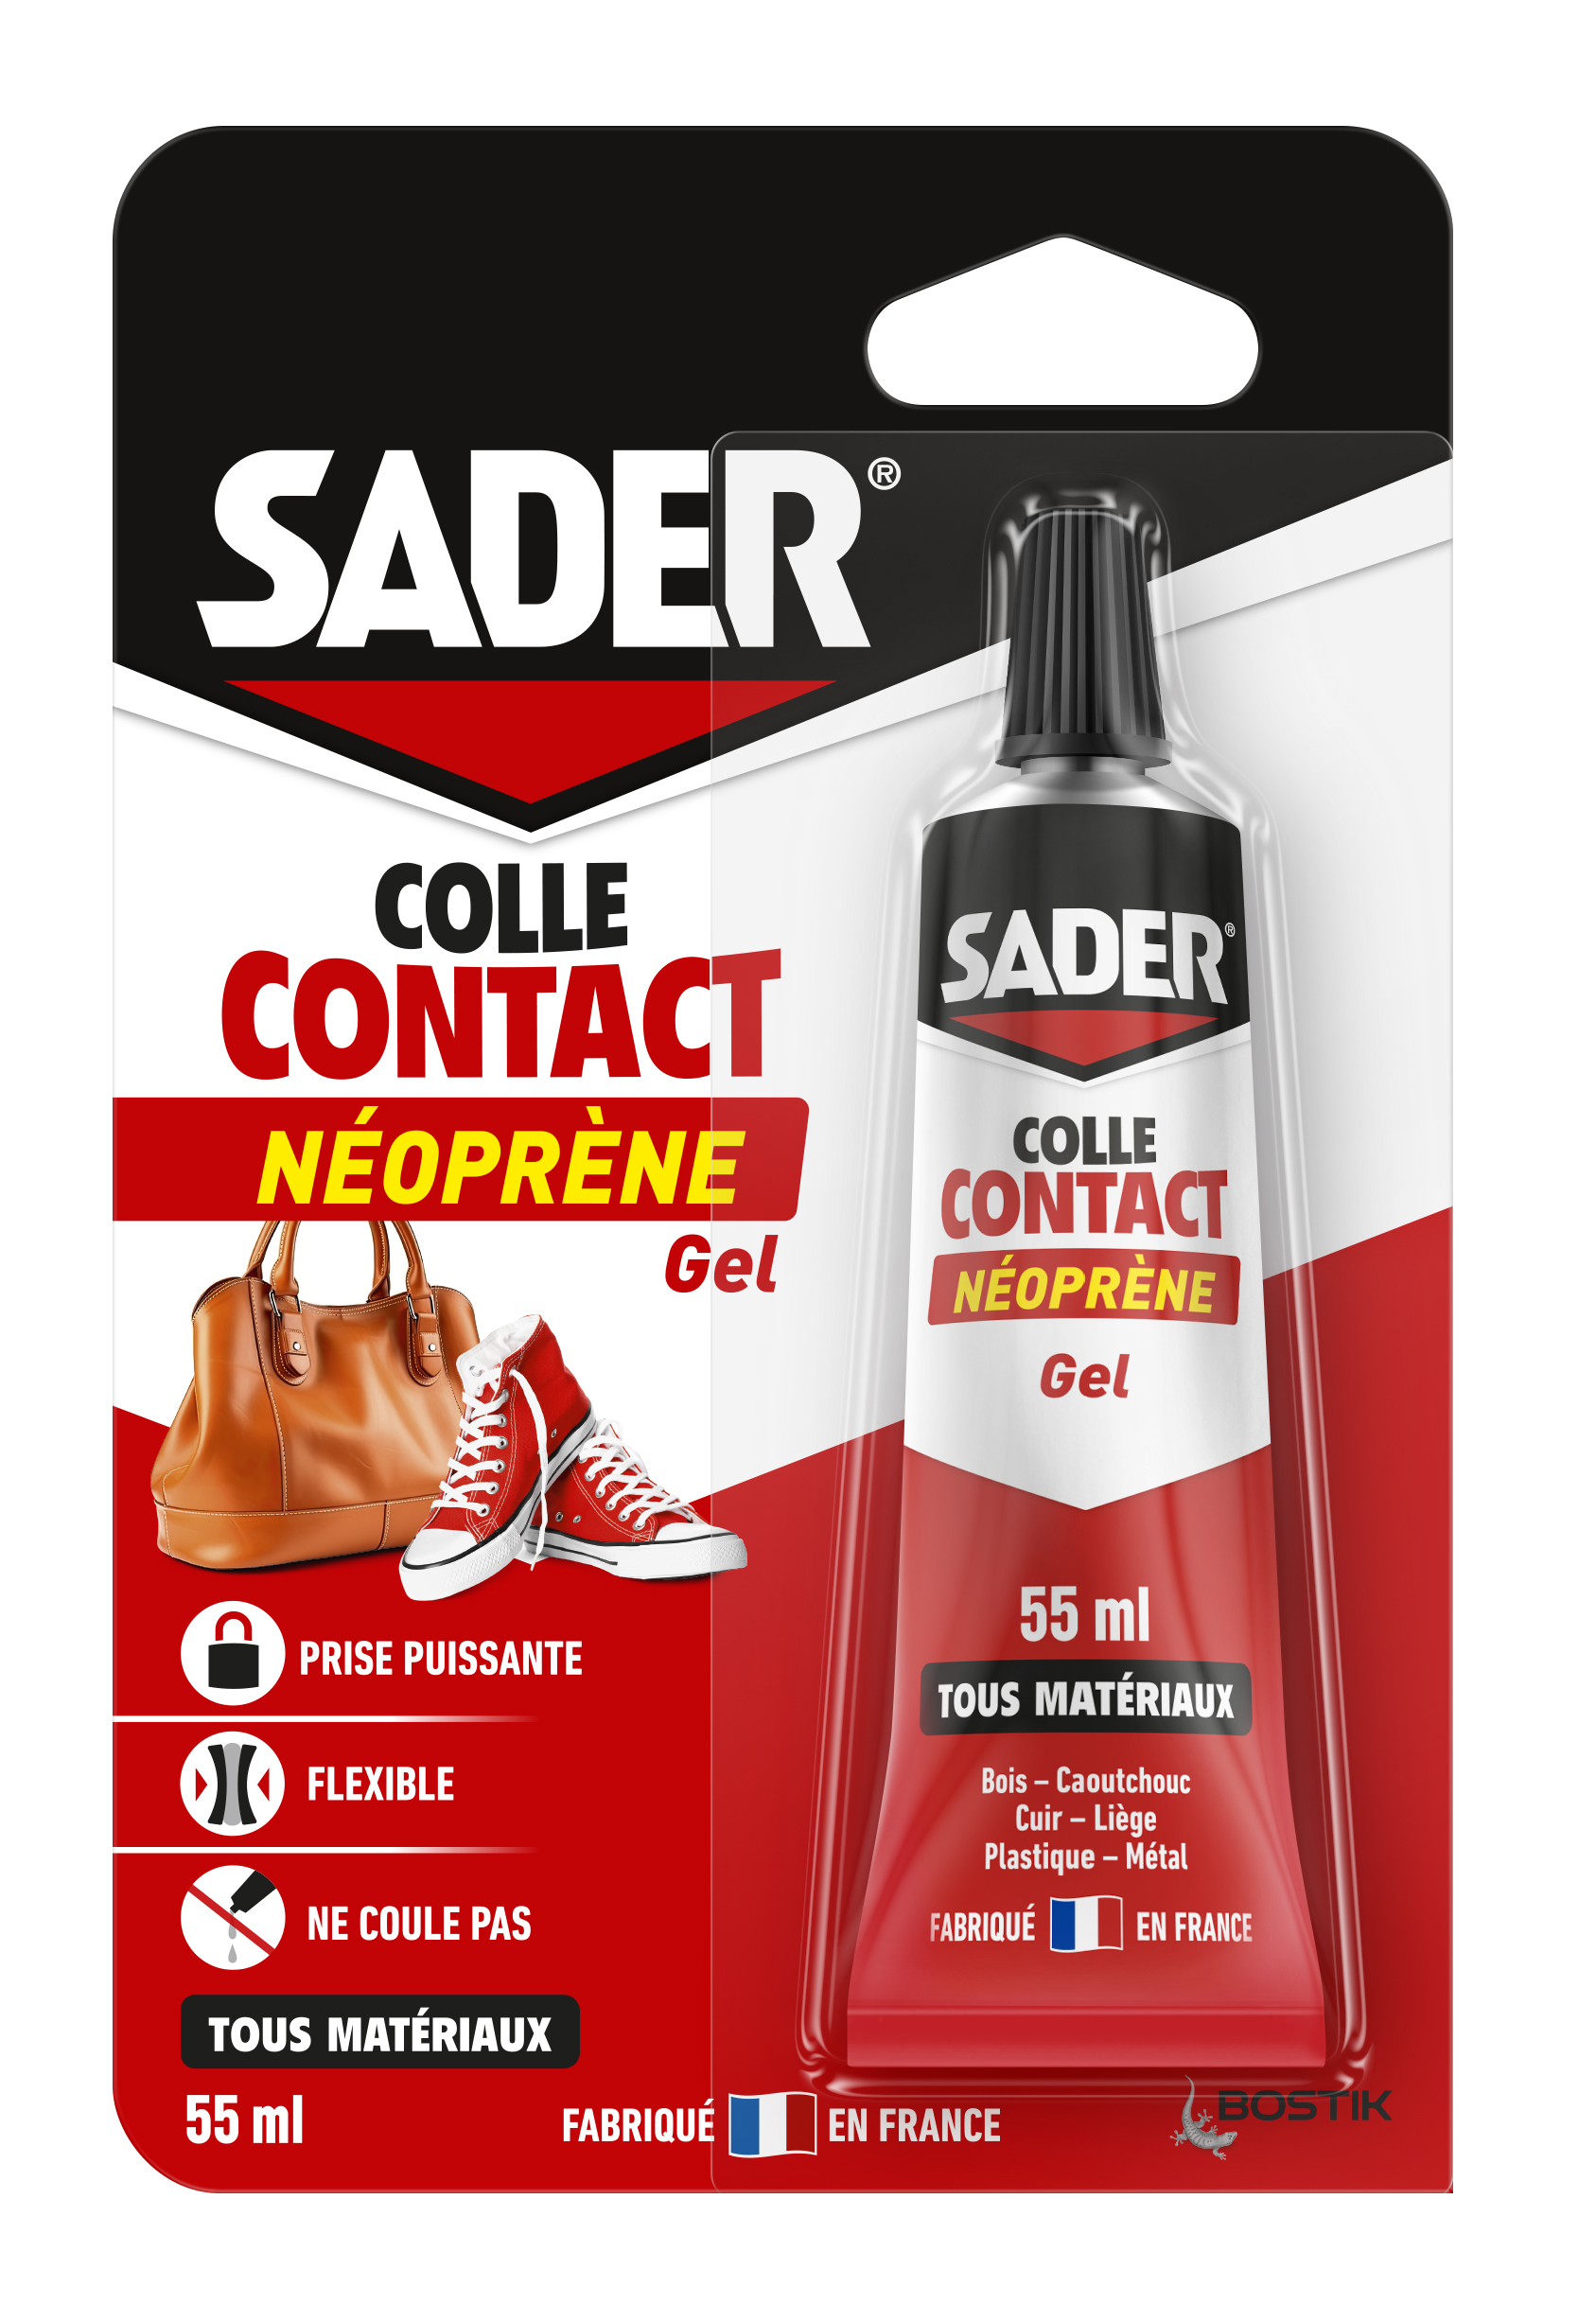 Colle contact néoprène gel 55ml - SADER